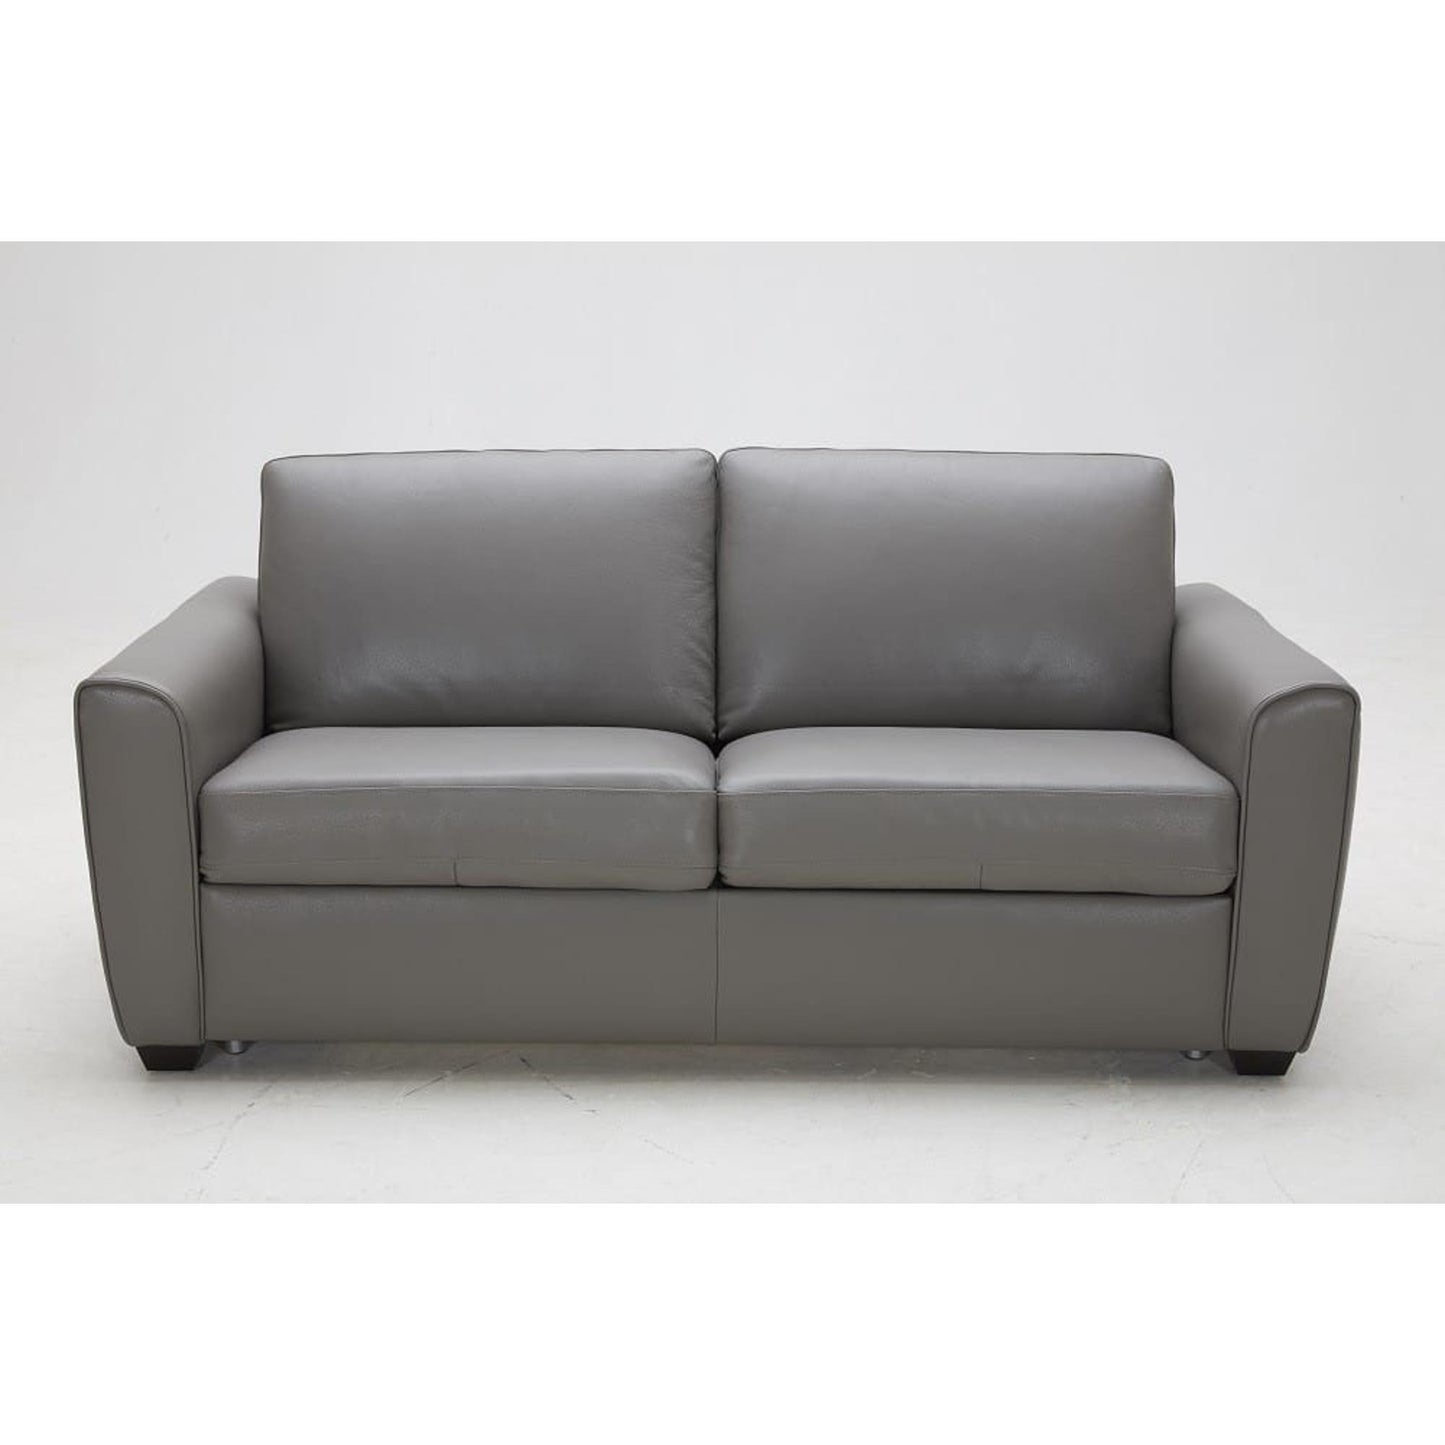 Jasper Premium Sofa Bed in Gray